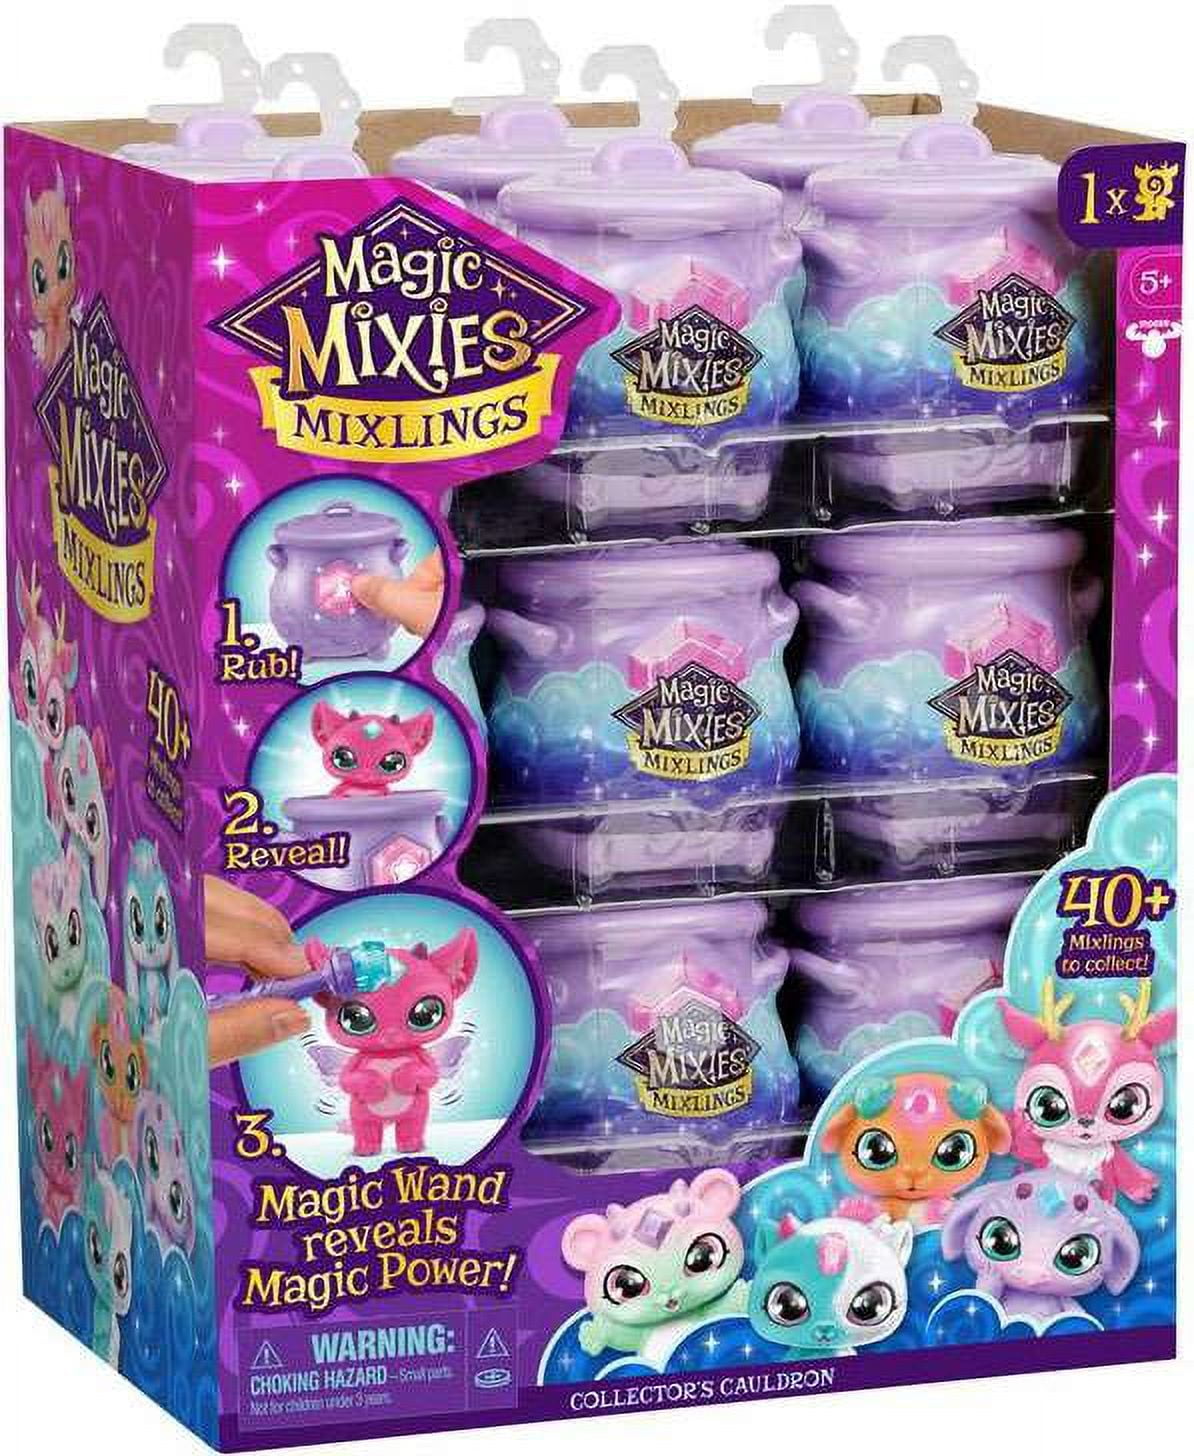 Magic Mixies Mixlings Collector's Cauldron Series 1 Mystery Box (18 Packs)